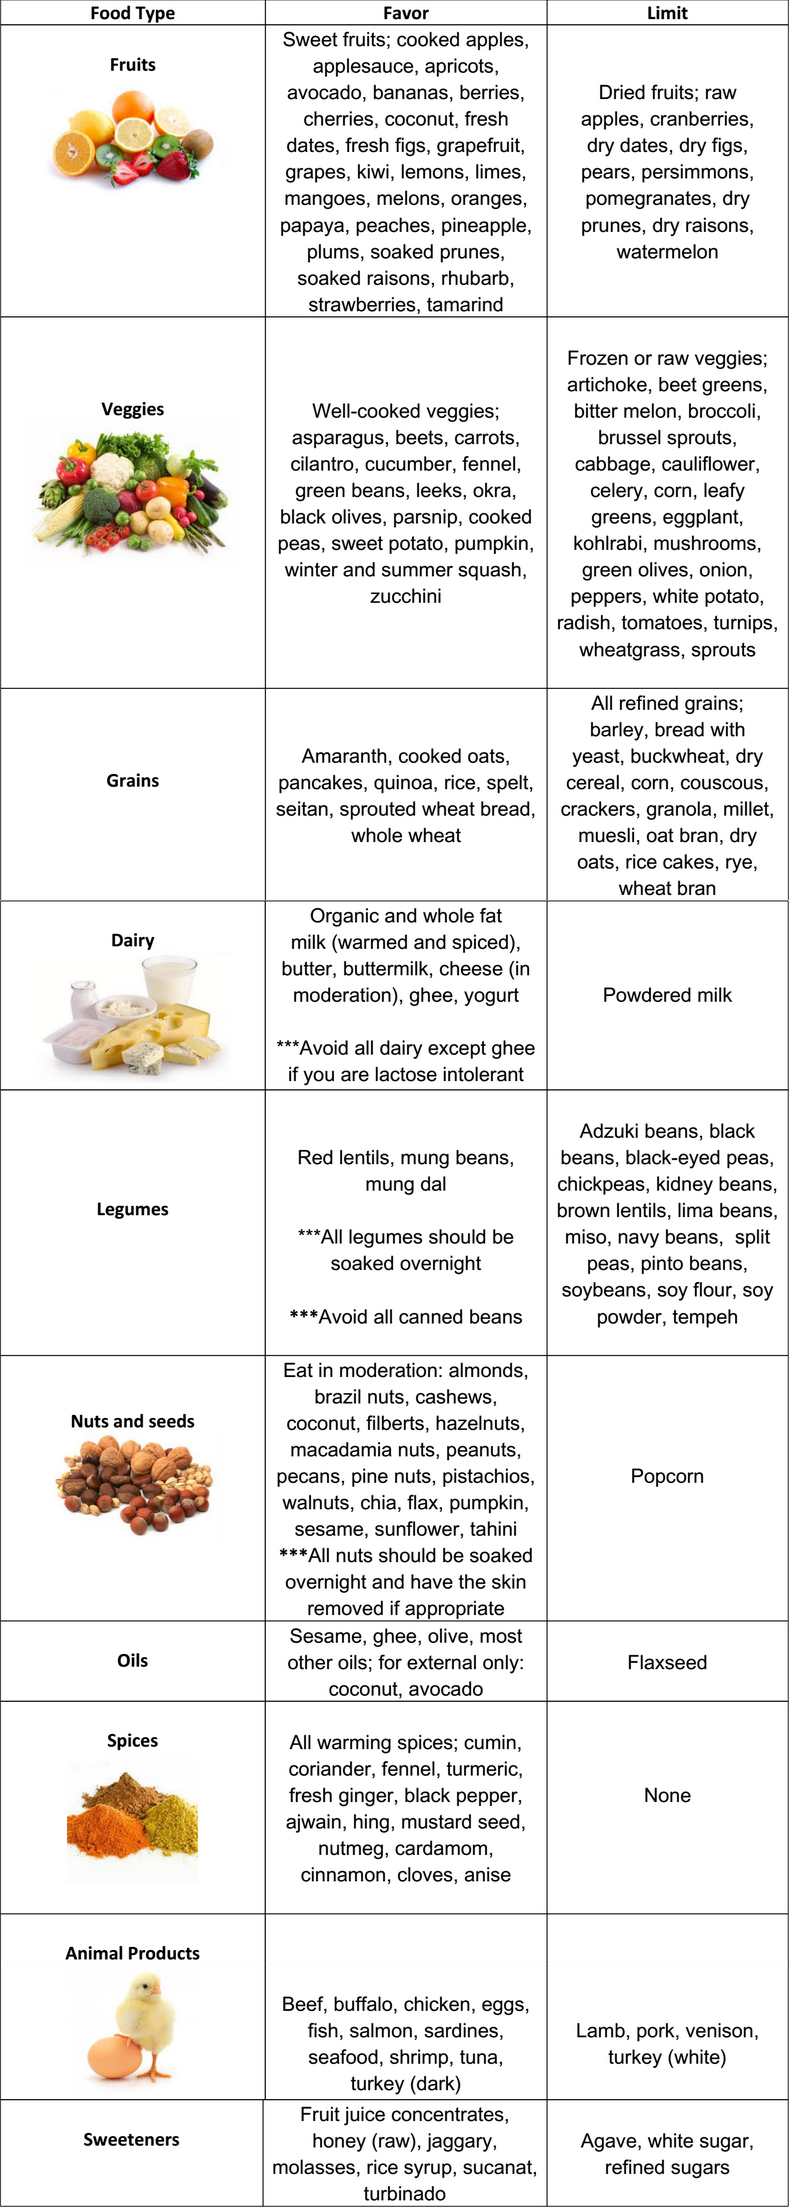 Pitta Food Chart